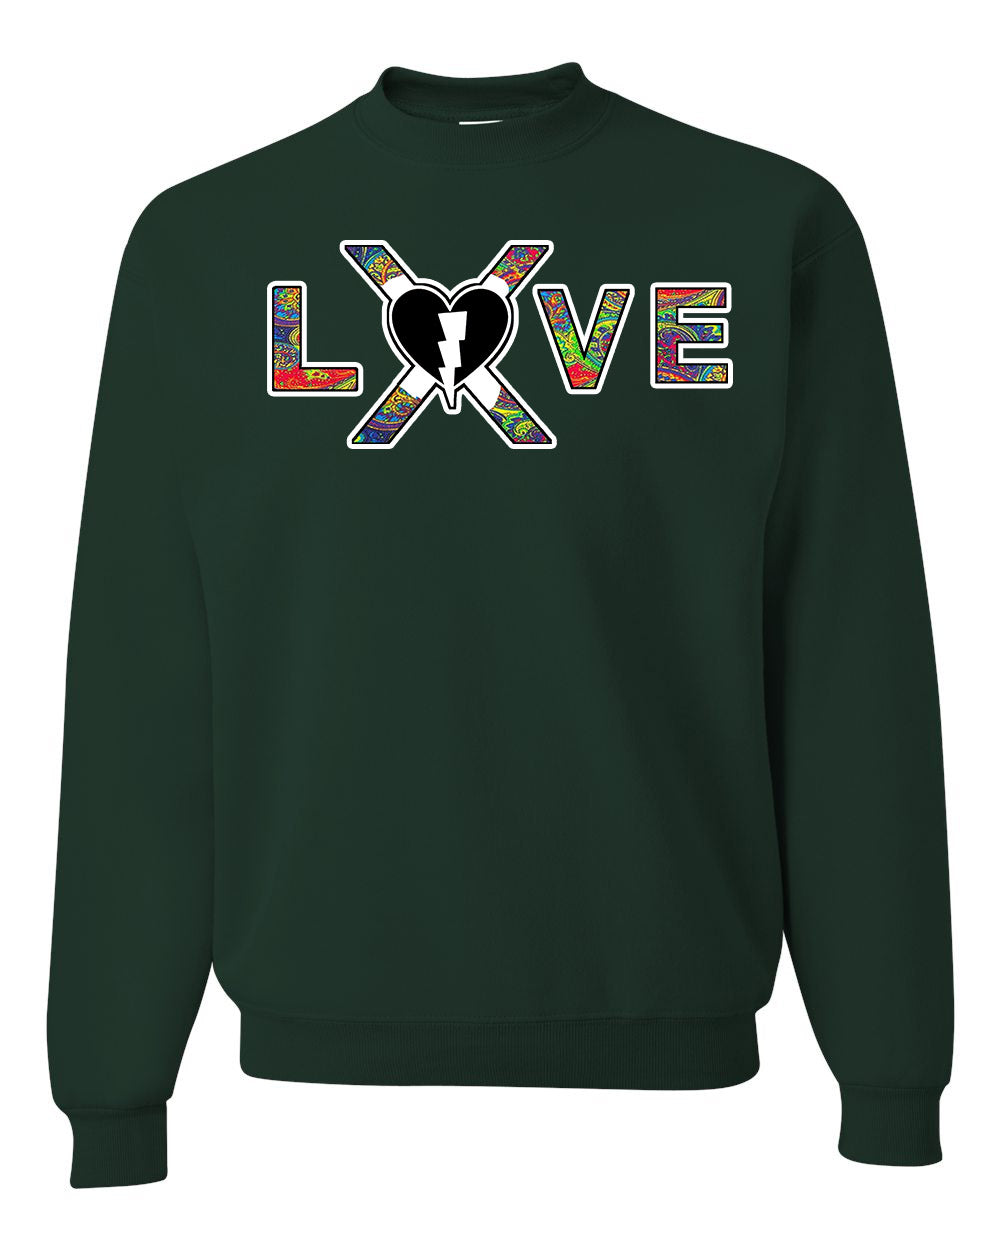 Live X Love Sweatshirt (Prism)